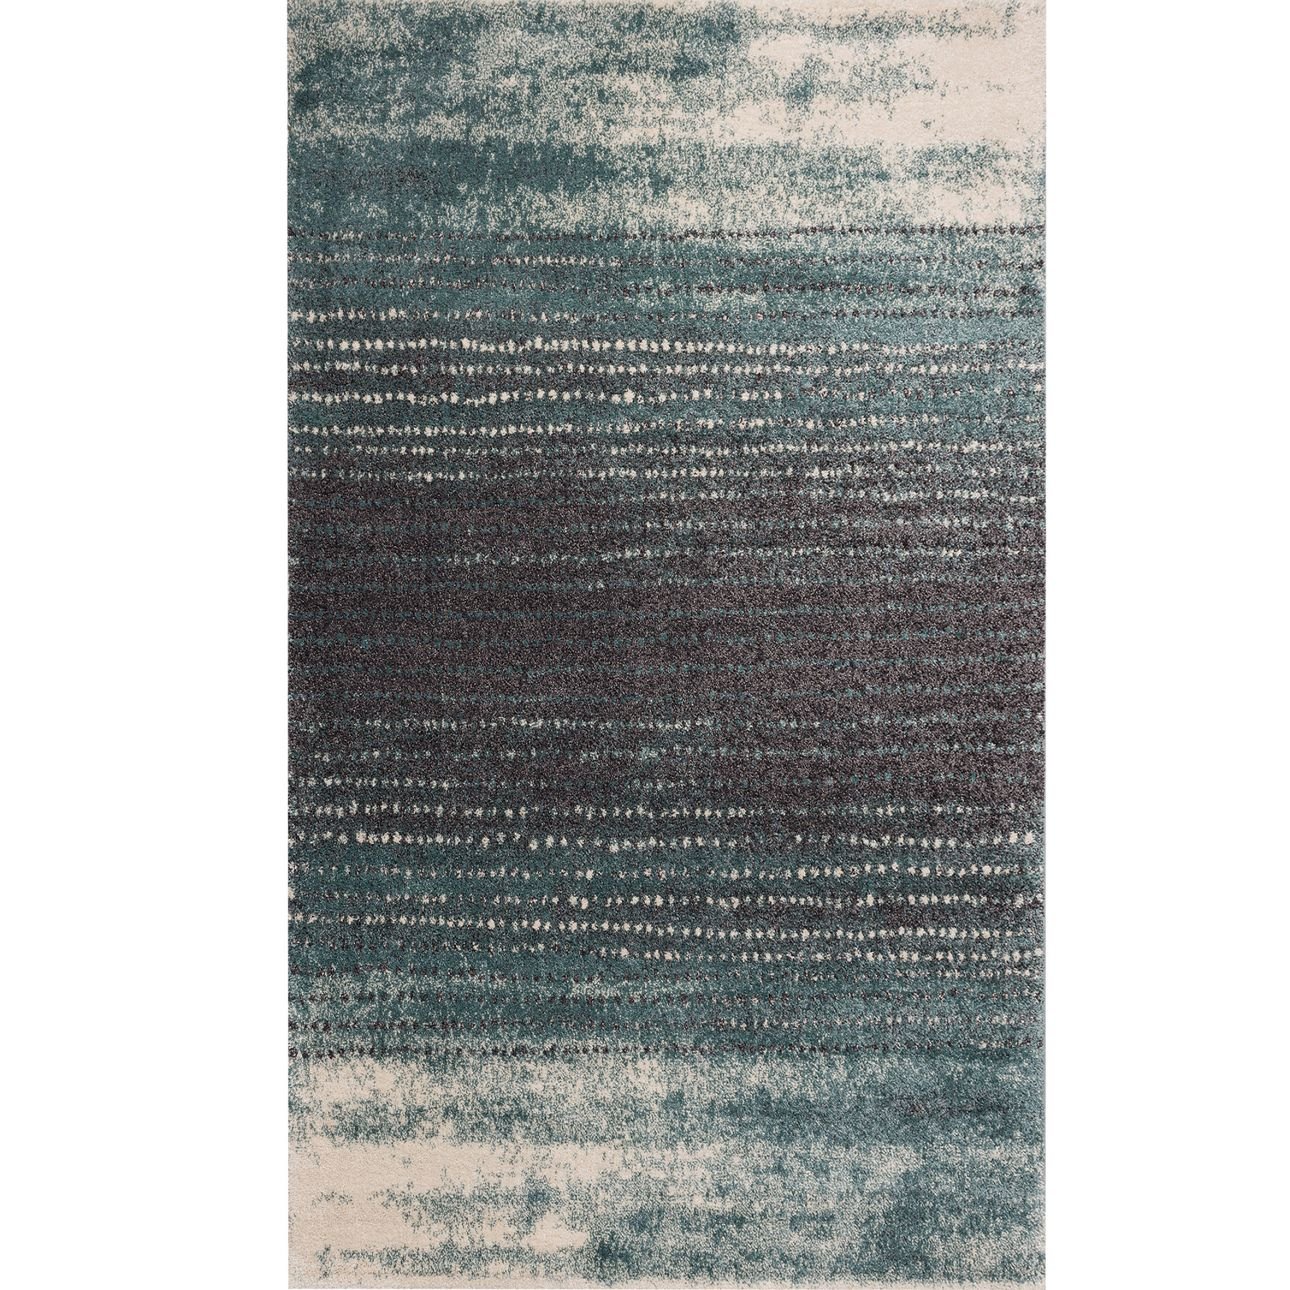 Dekoria Koberec Modern Teal blue-dark grey 160x230cm, 2160 x 230 cm